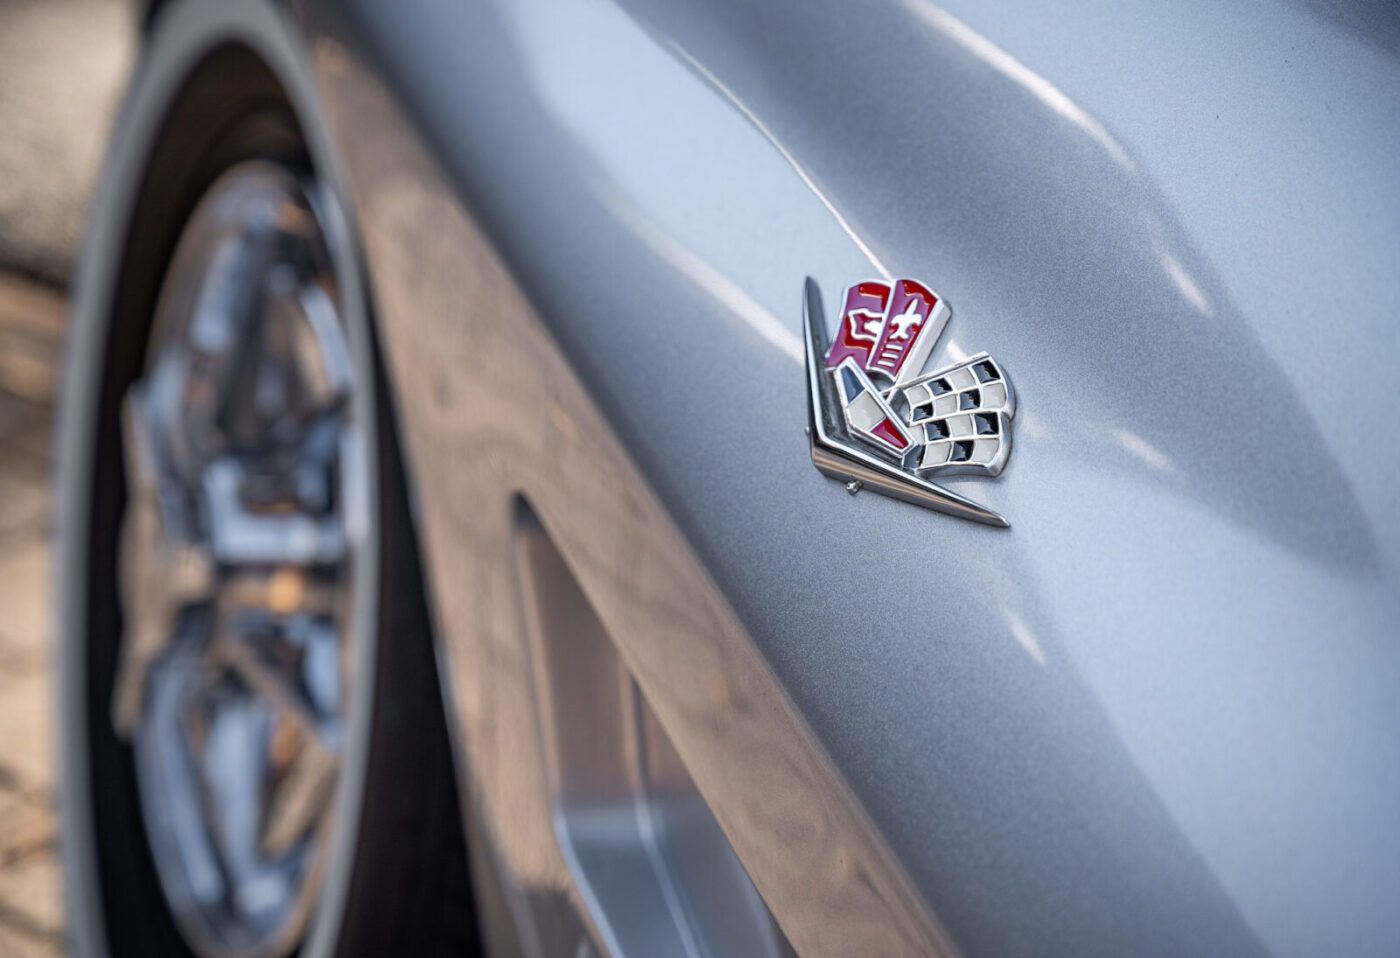 Corvette Sting Ray badge